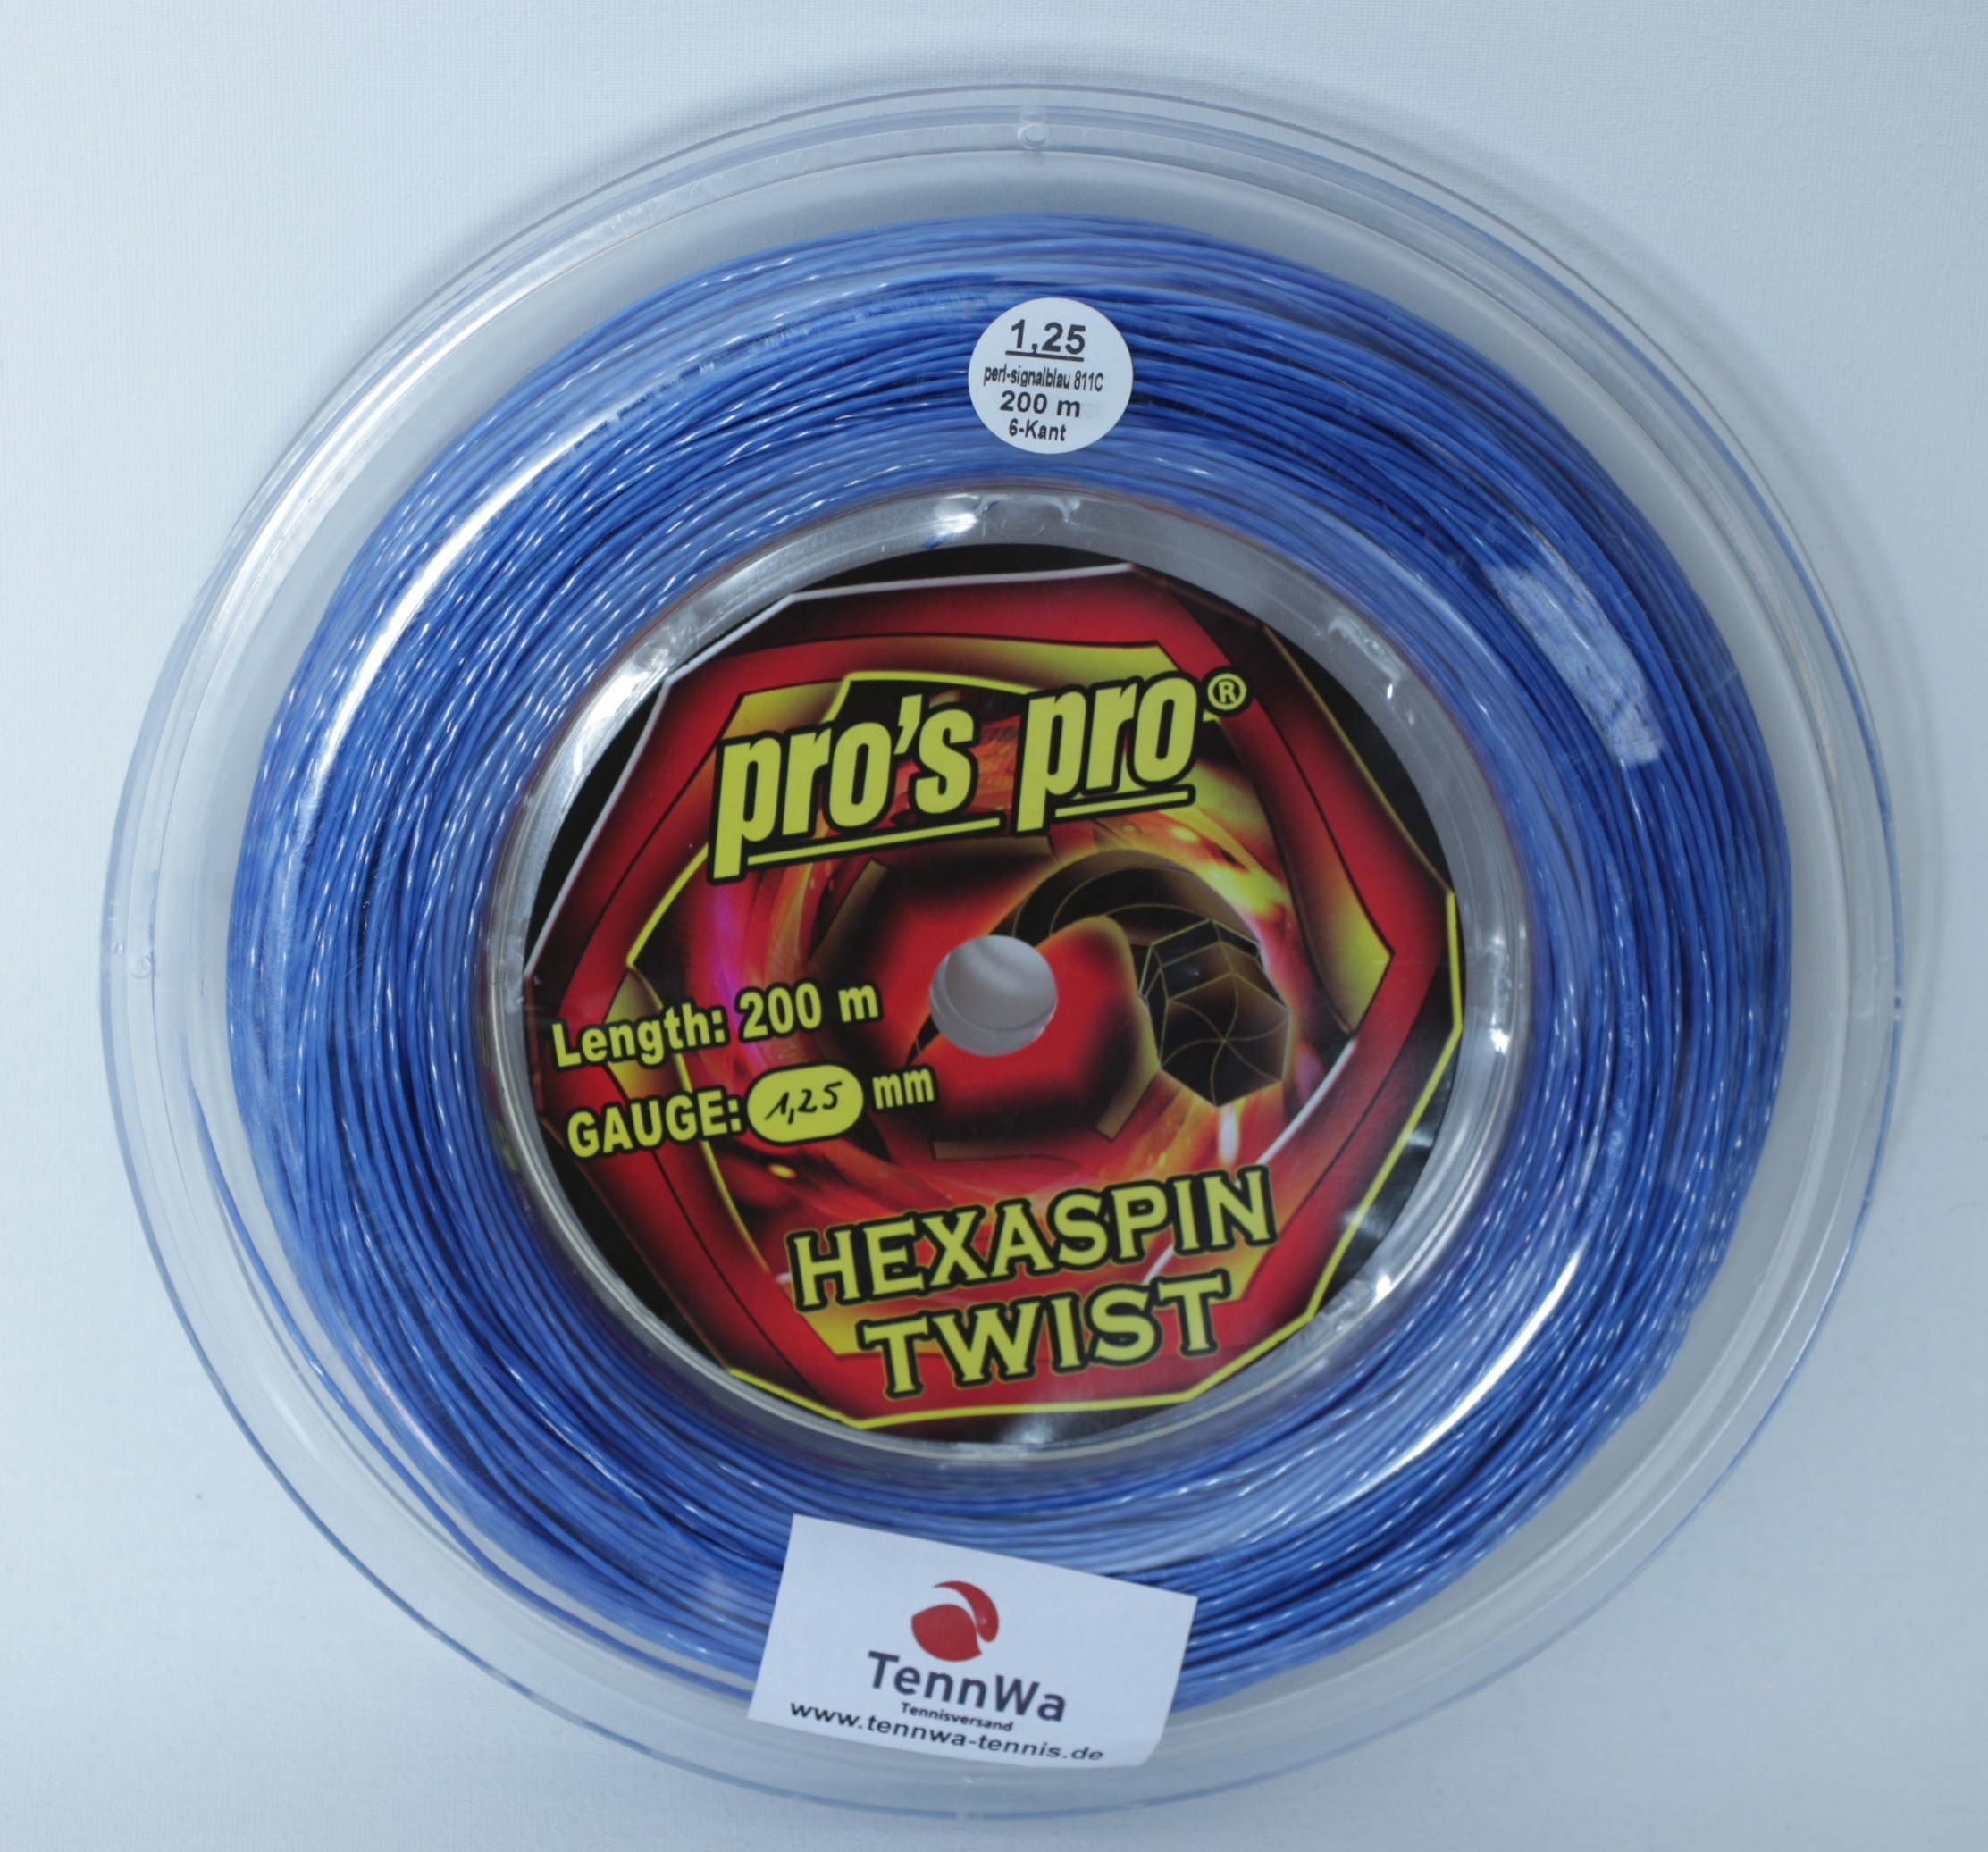 Pros Pro Hexaspin Twist blau, 200m